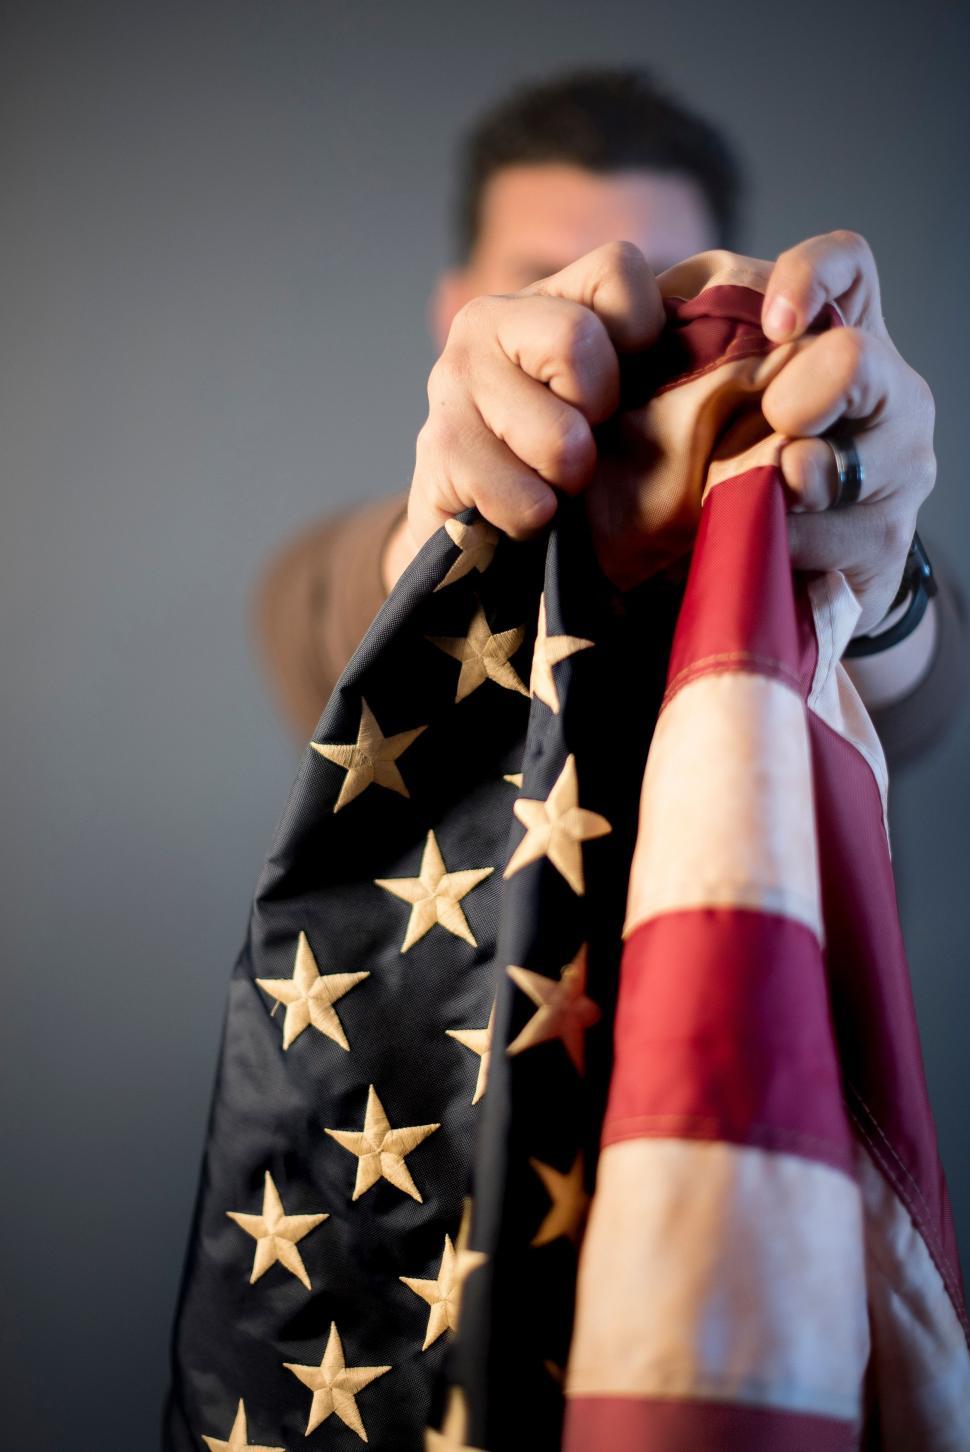 Free Image of Man Tying American Flag Tie 